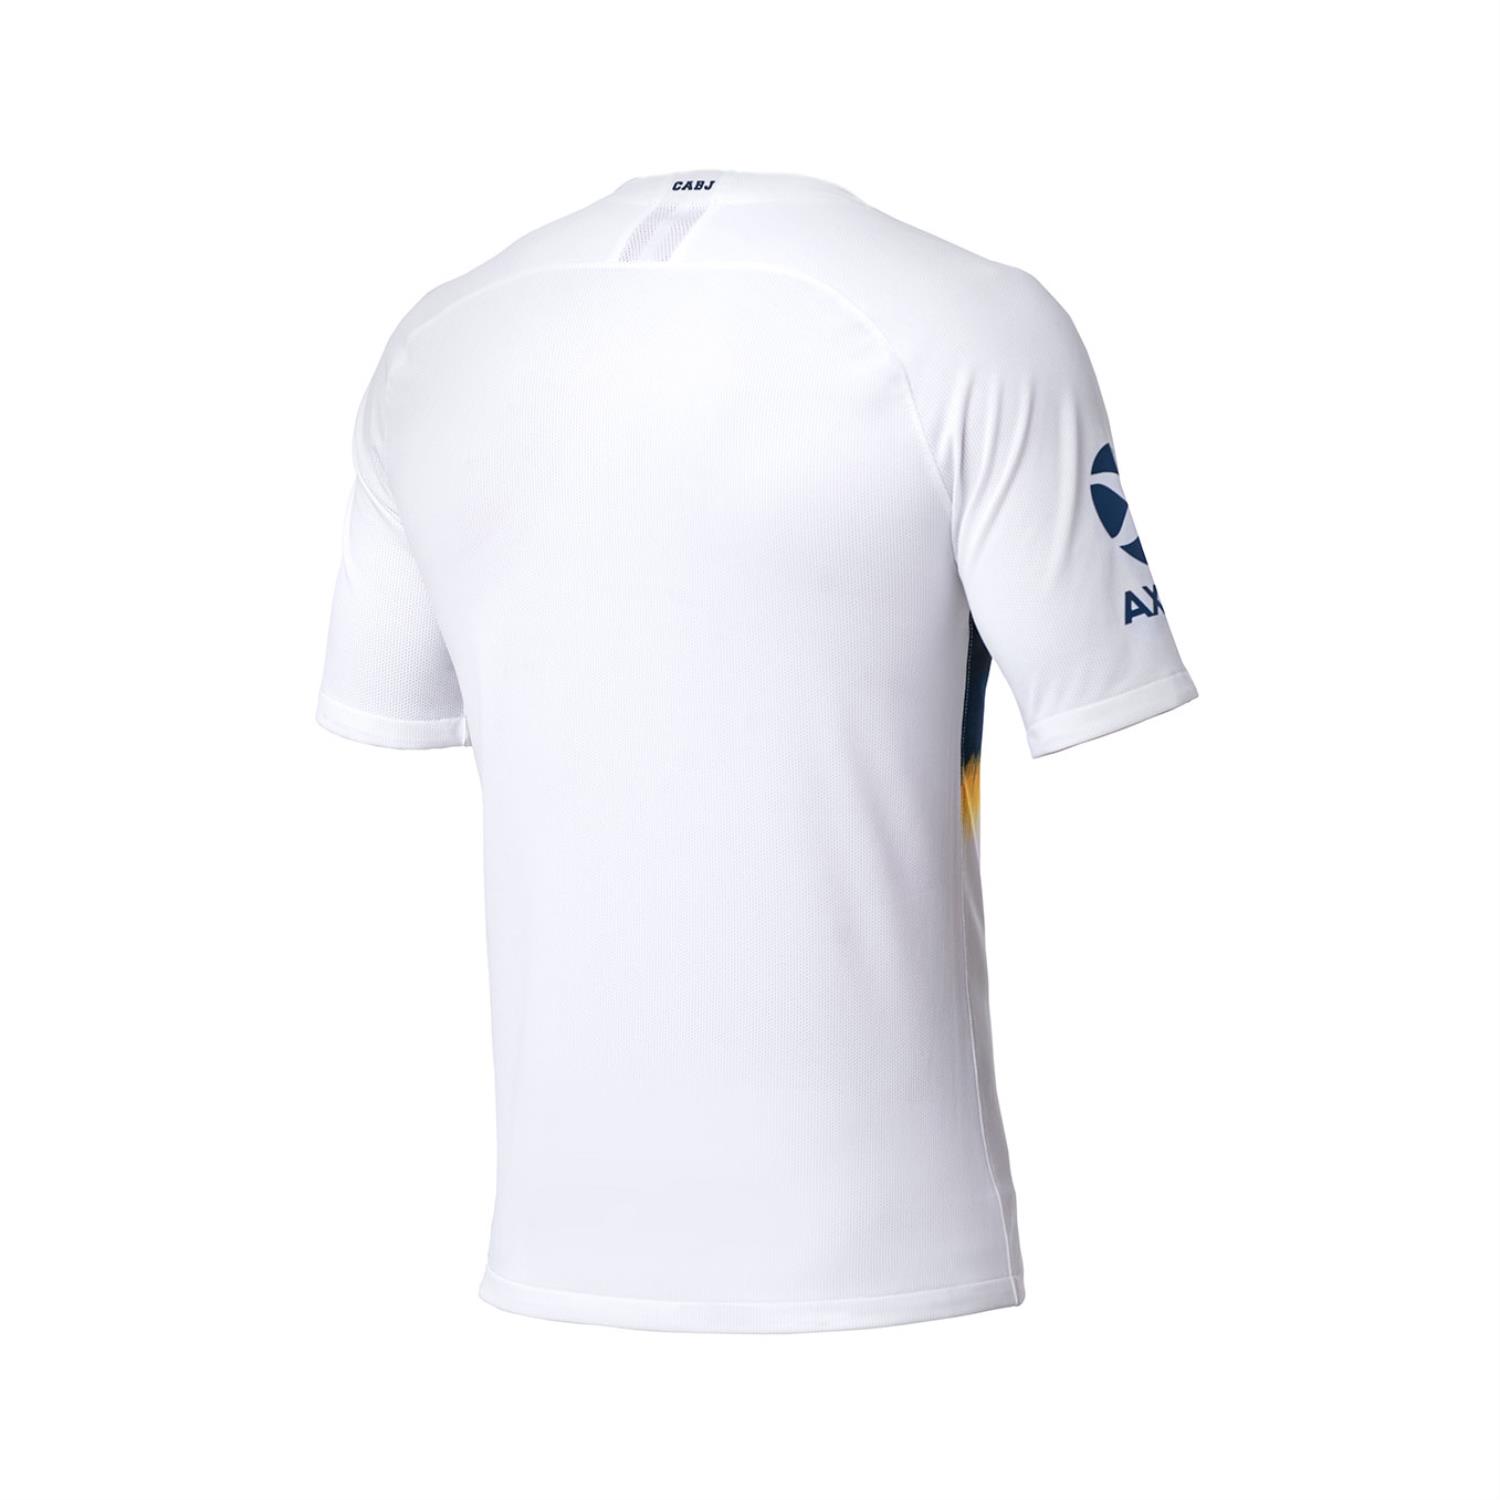 Boca Juniors 18/19 Nike Away Kit | 18/19 Kits | Football shirt blog